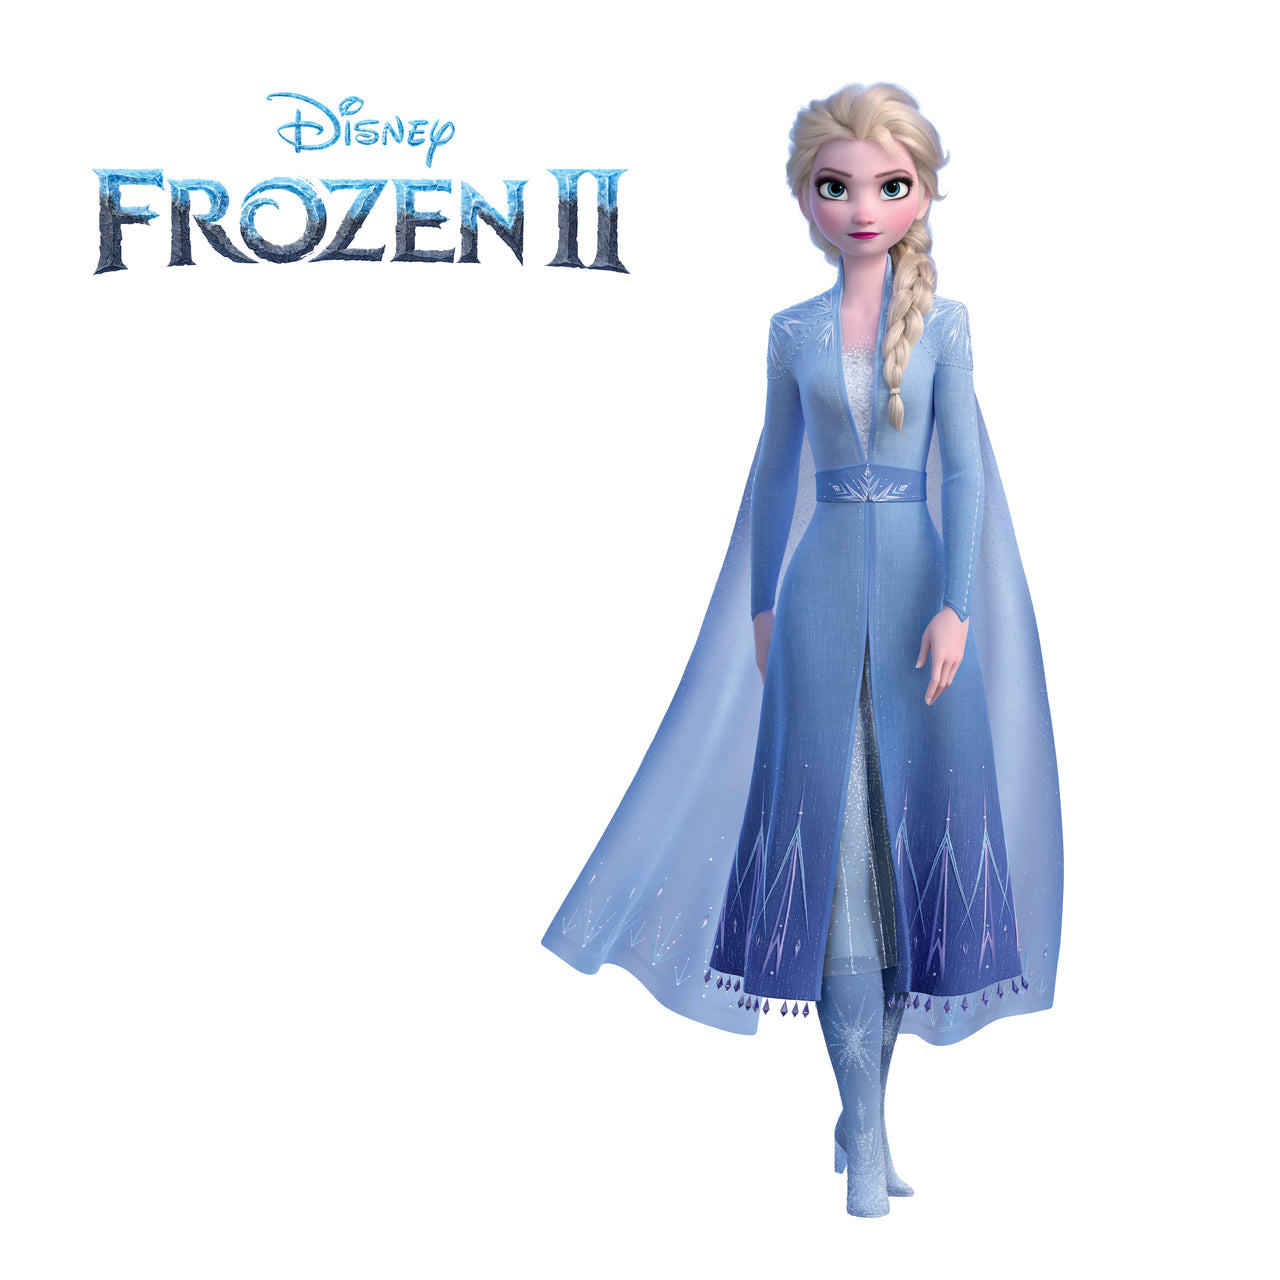 Frozen 2 Elsa Interactive Wall Decal